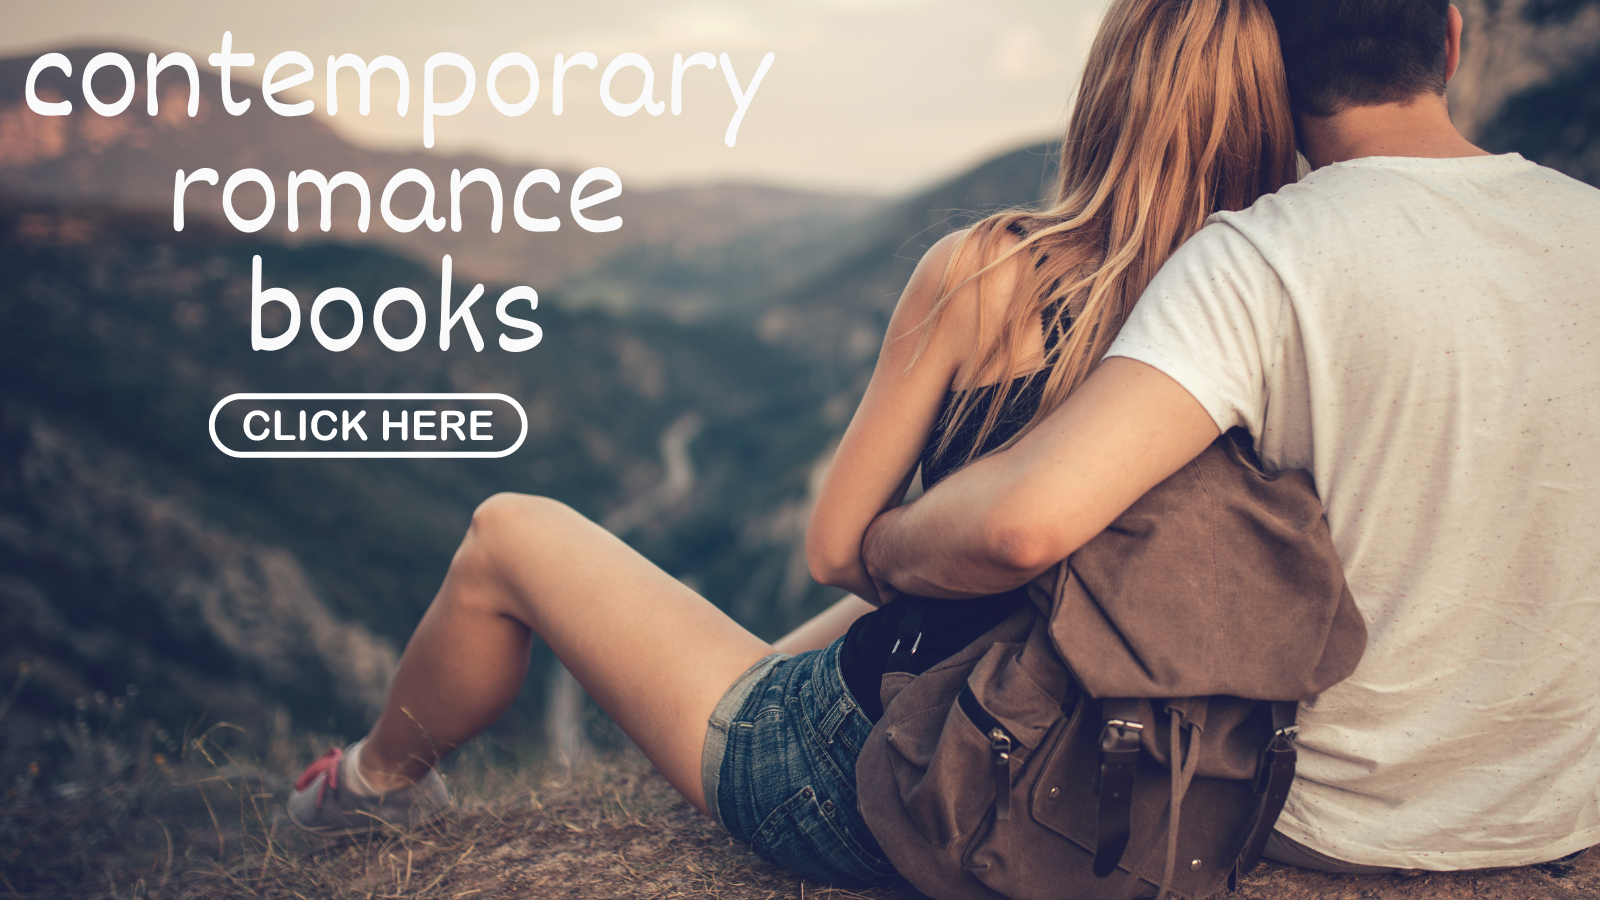 click here for contemporary romance books